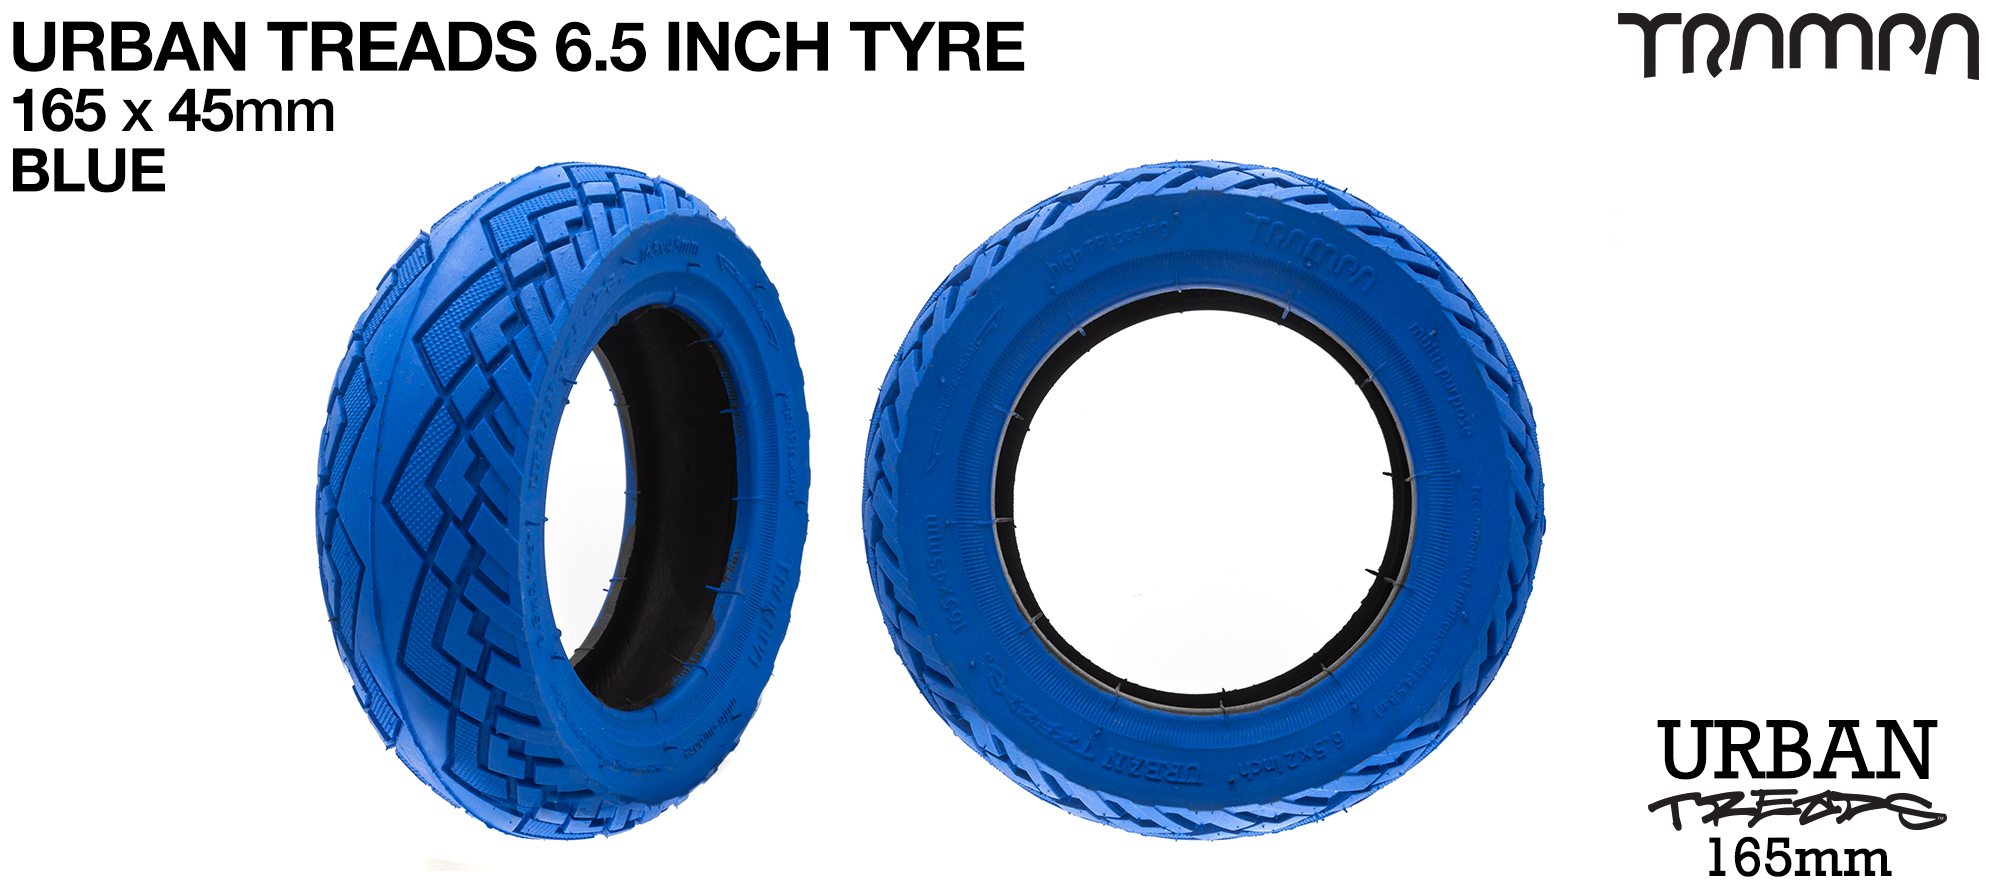 6 Inch URBAN Treads Tyre - BLUE 